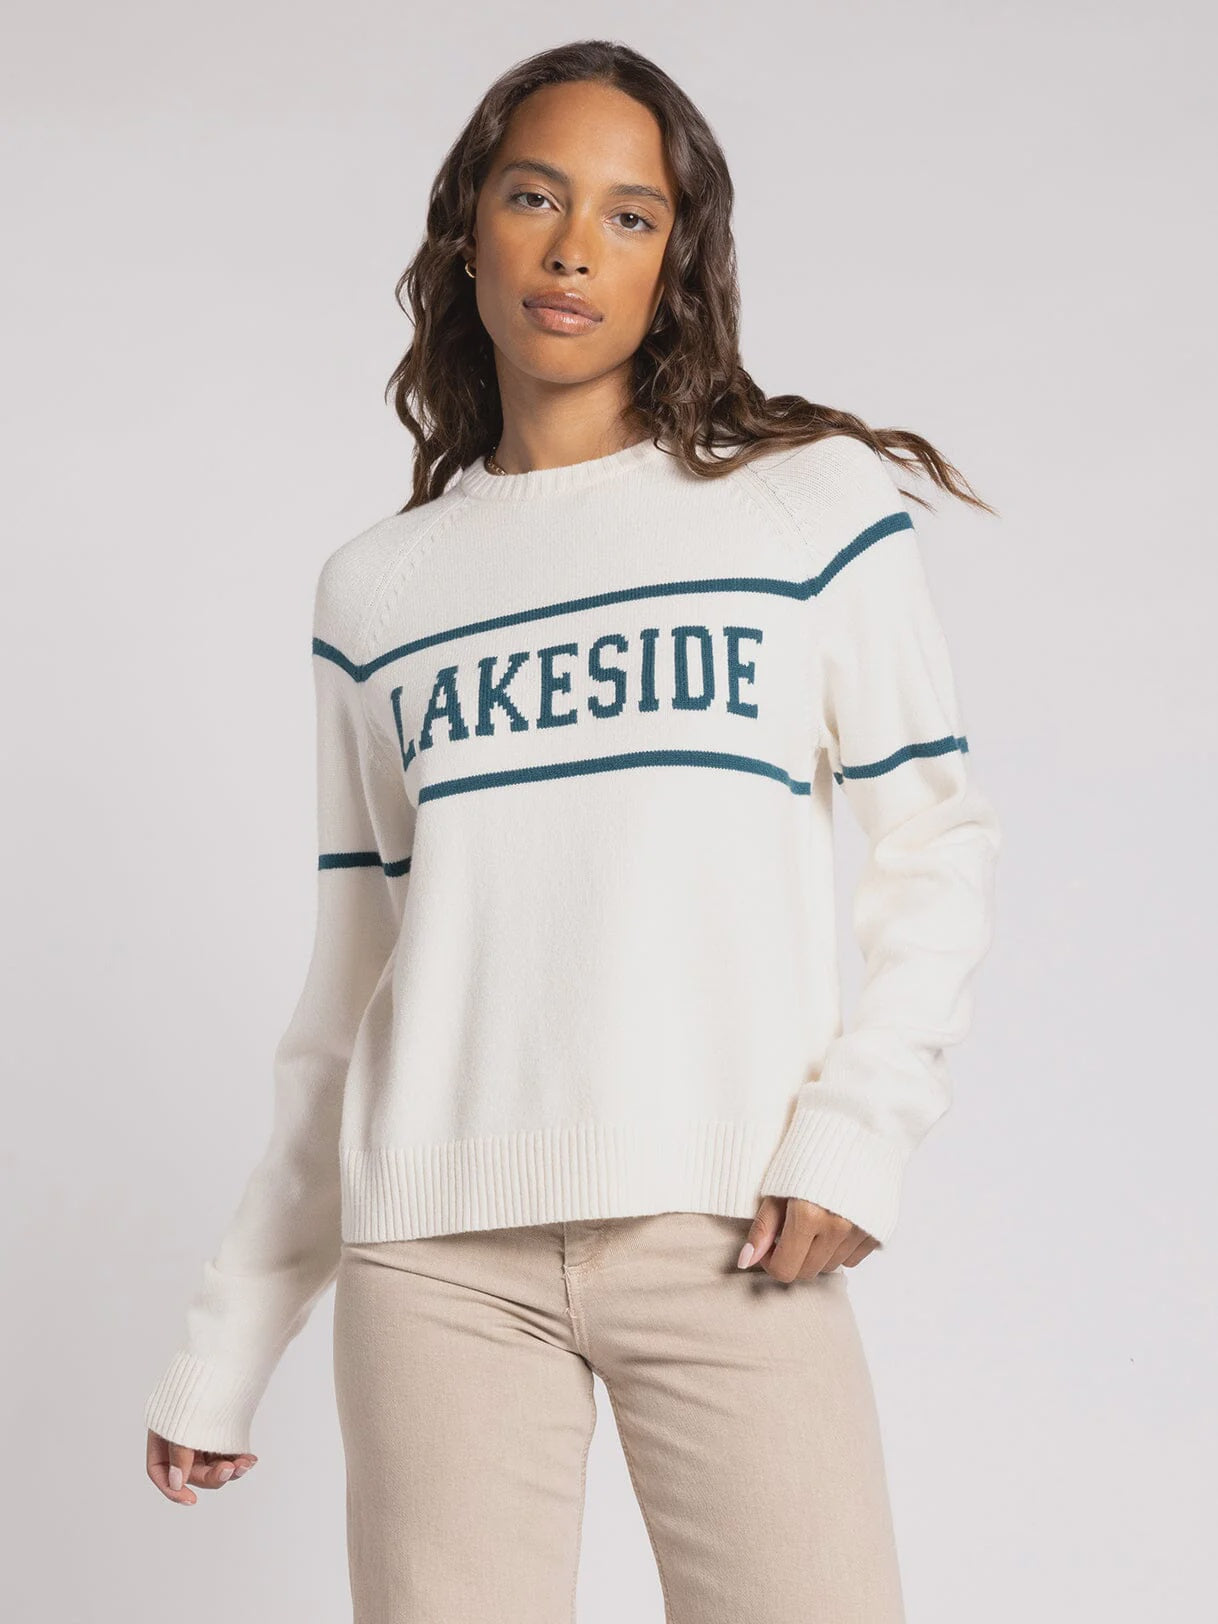 Lakeside Sweater